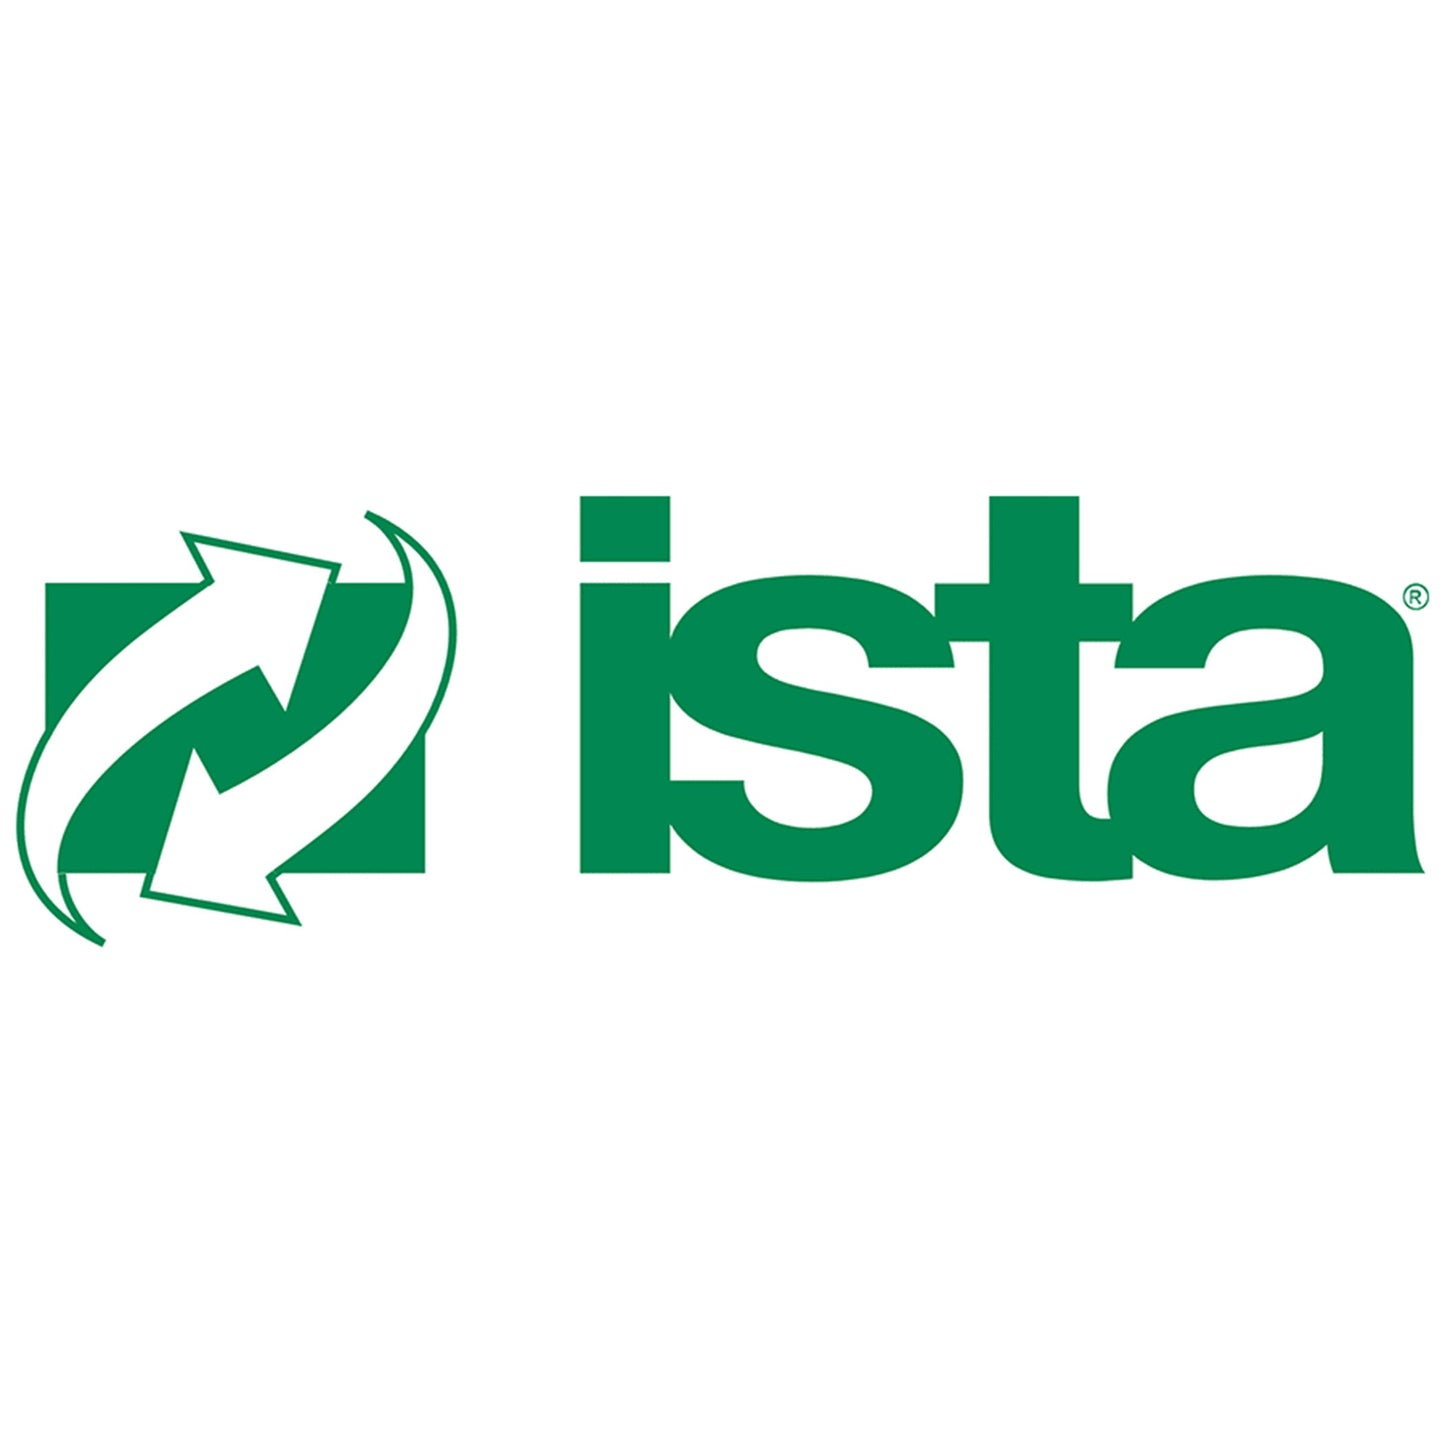 ISTA® Procedure 3-Series Testing